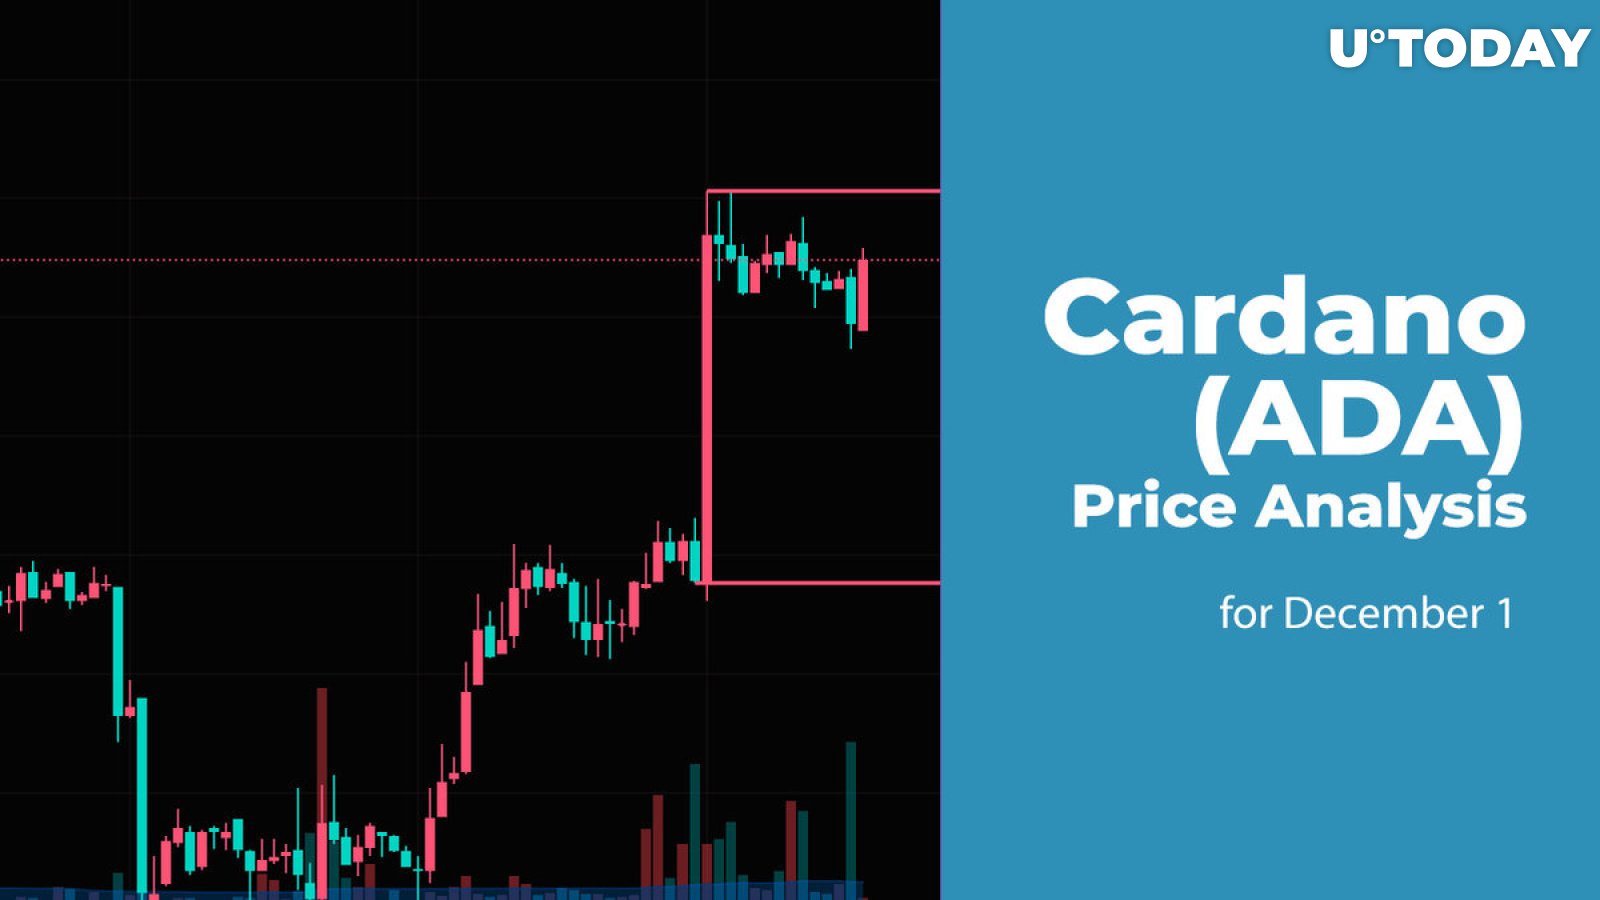 Cardano (ADA) Price Analysis for December 1